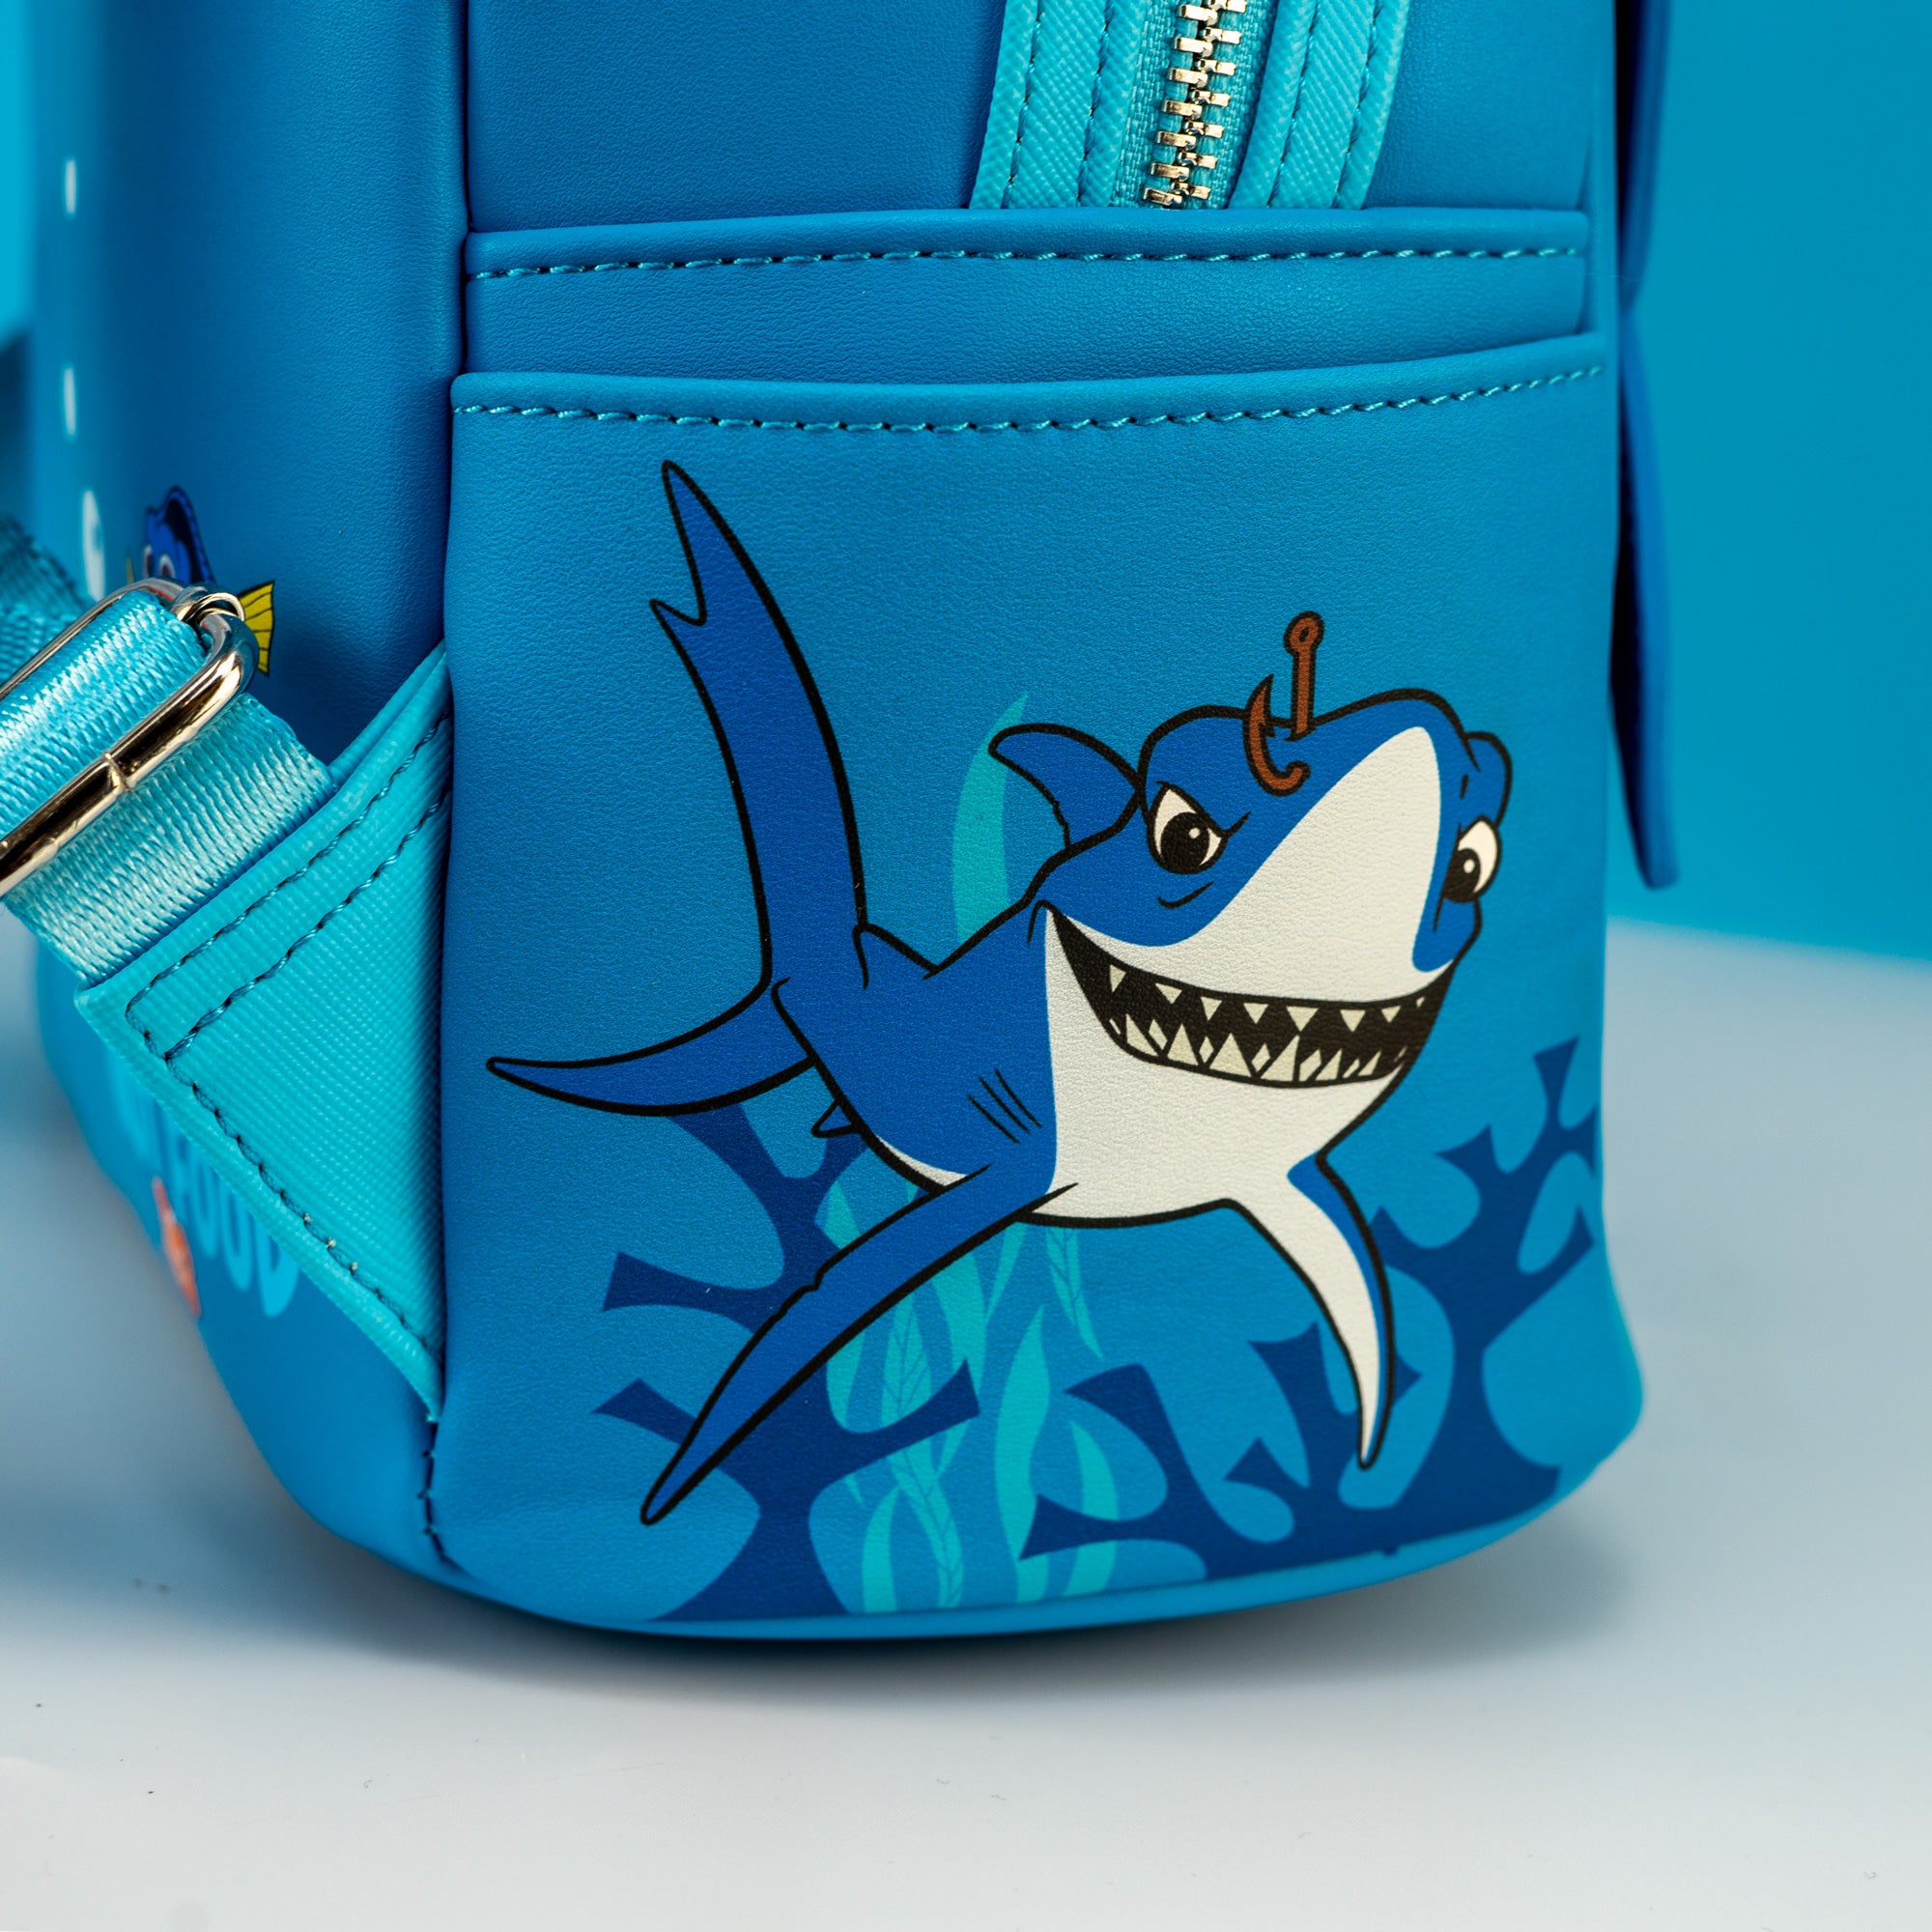 Loungefly x Pixar Finding Nemo Bruce Cosplay Mini Backpack